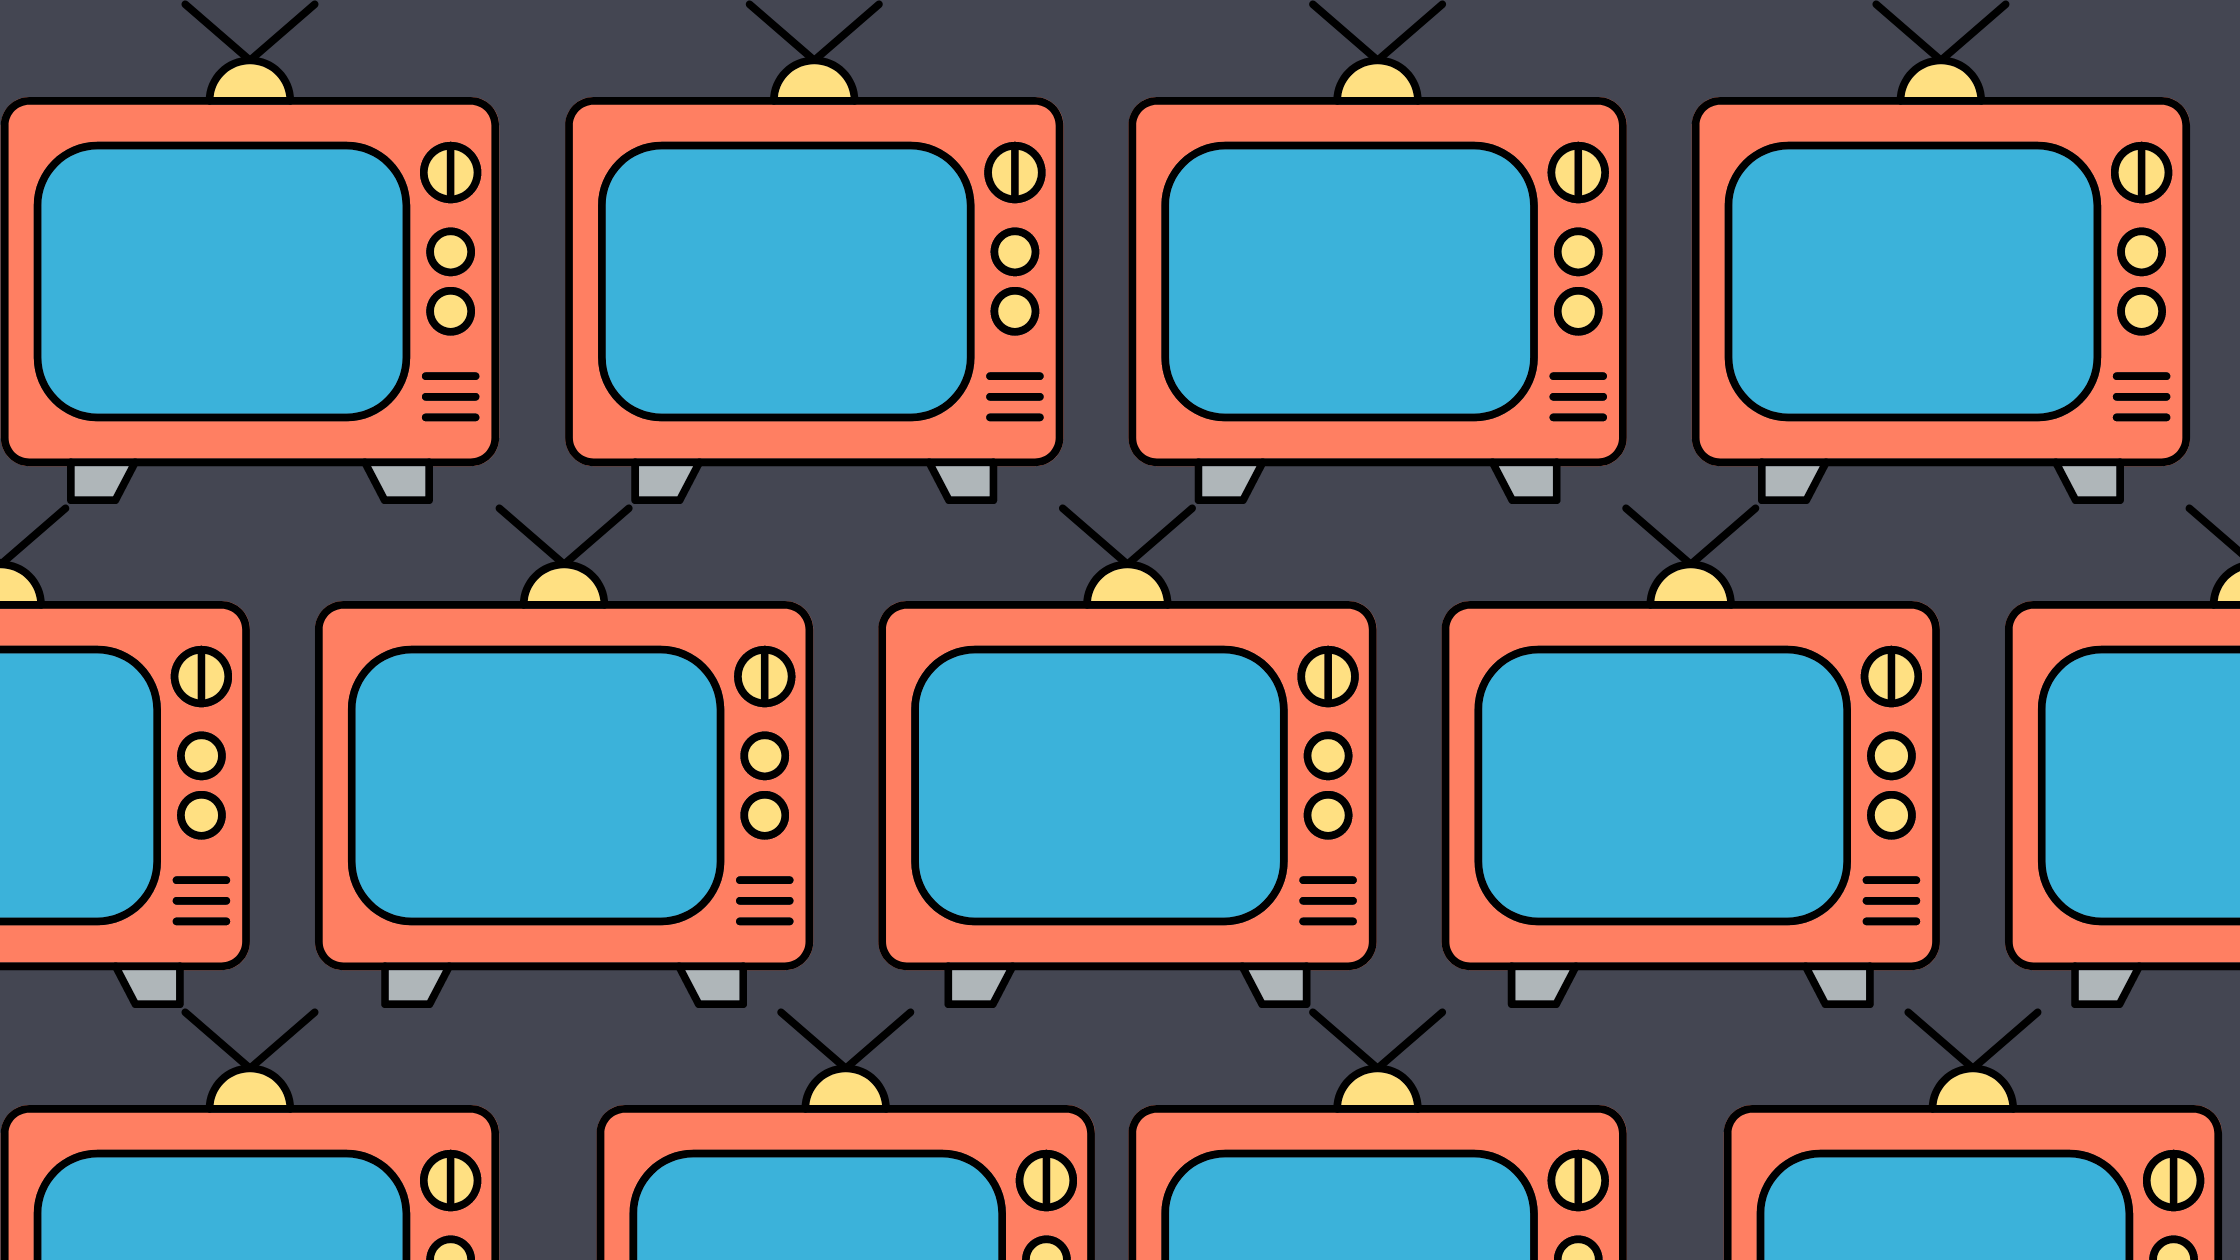 A pattern of cartoon-style TVs